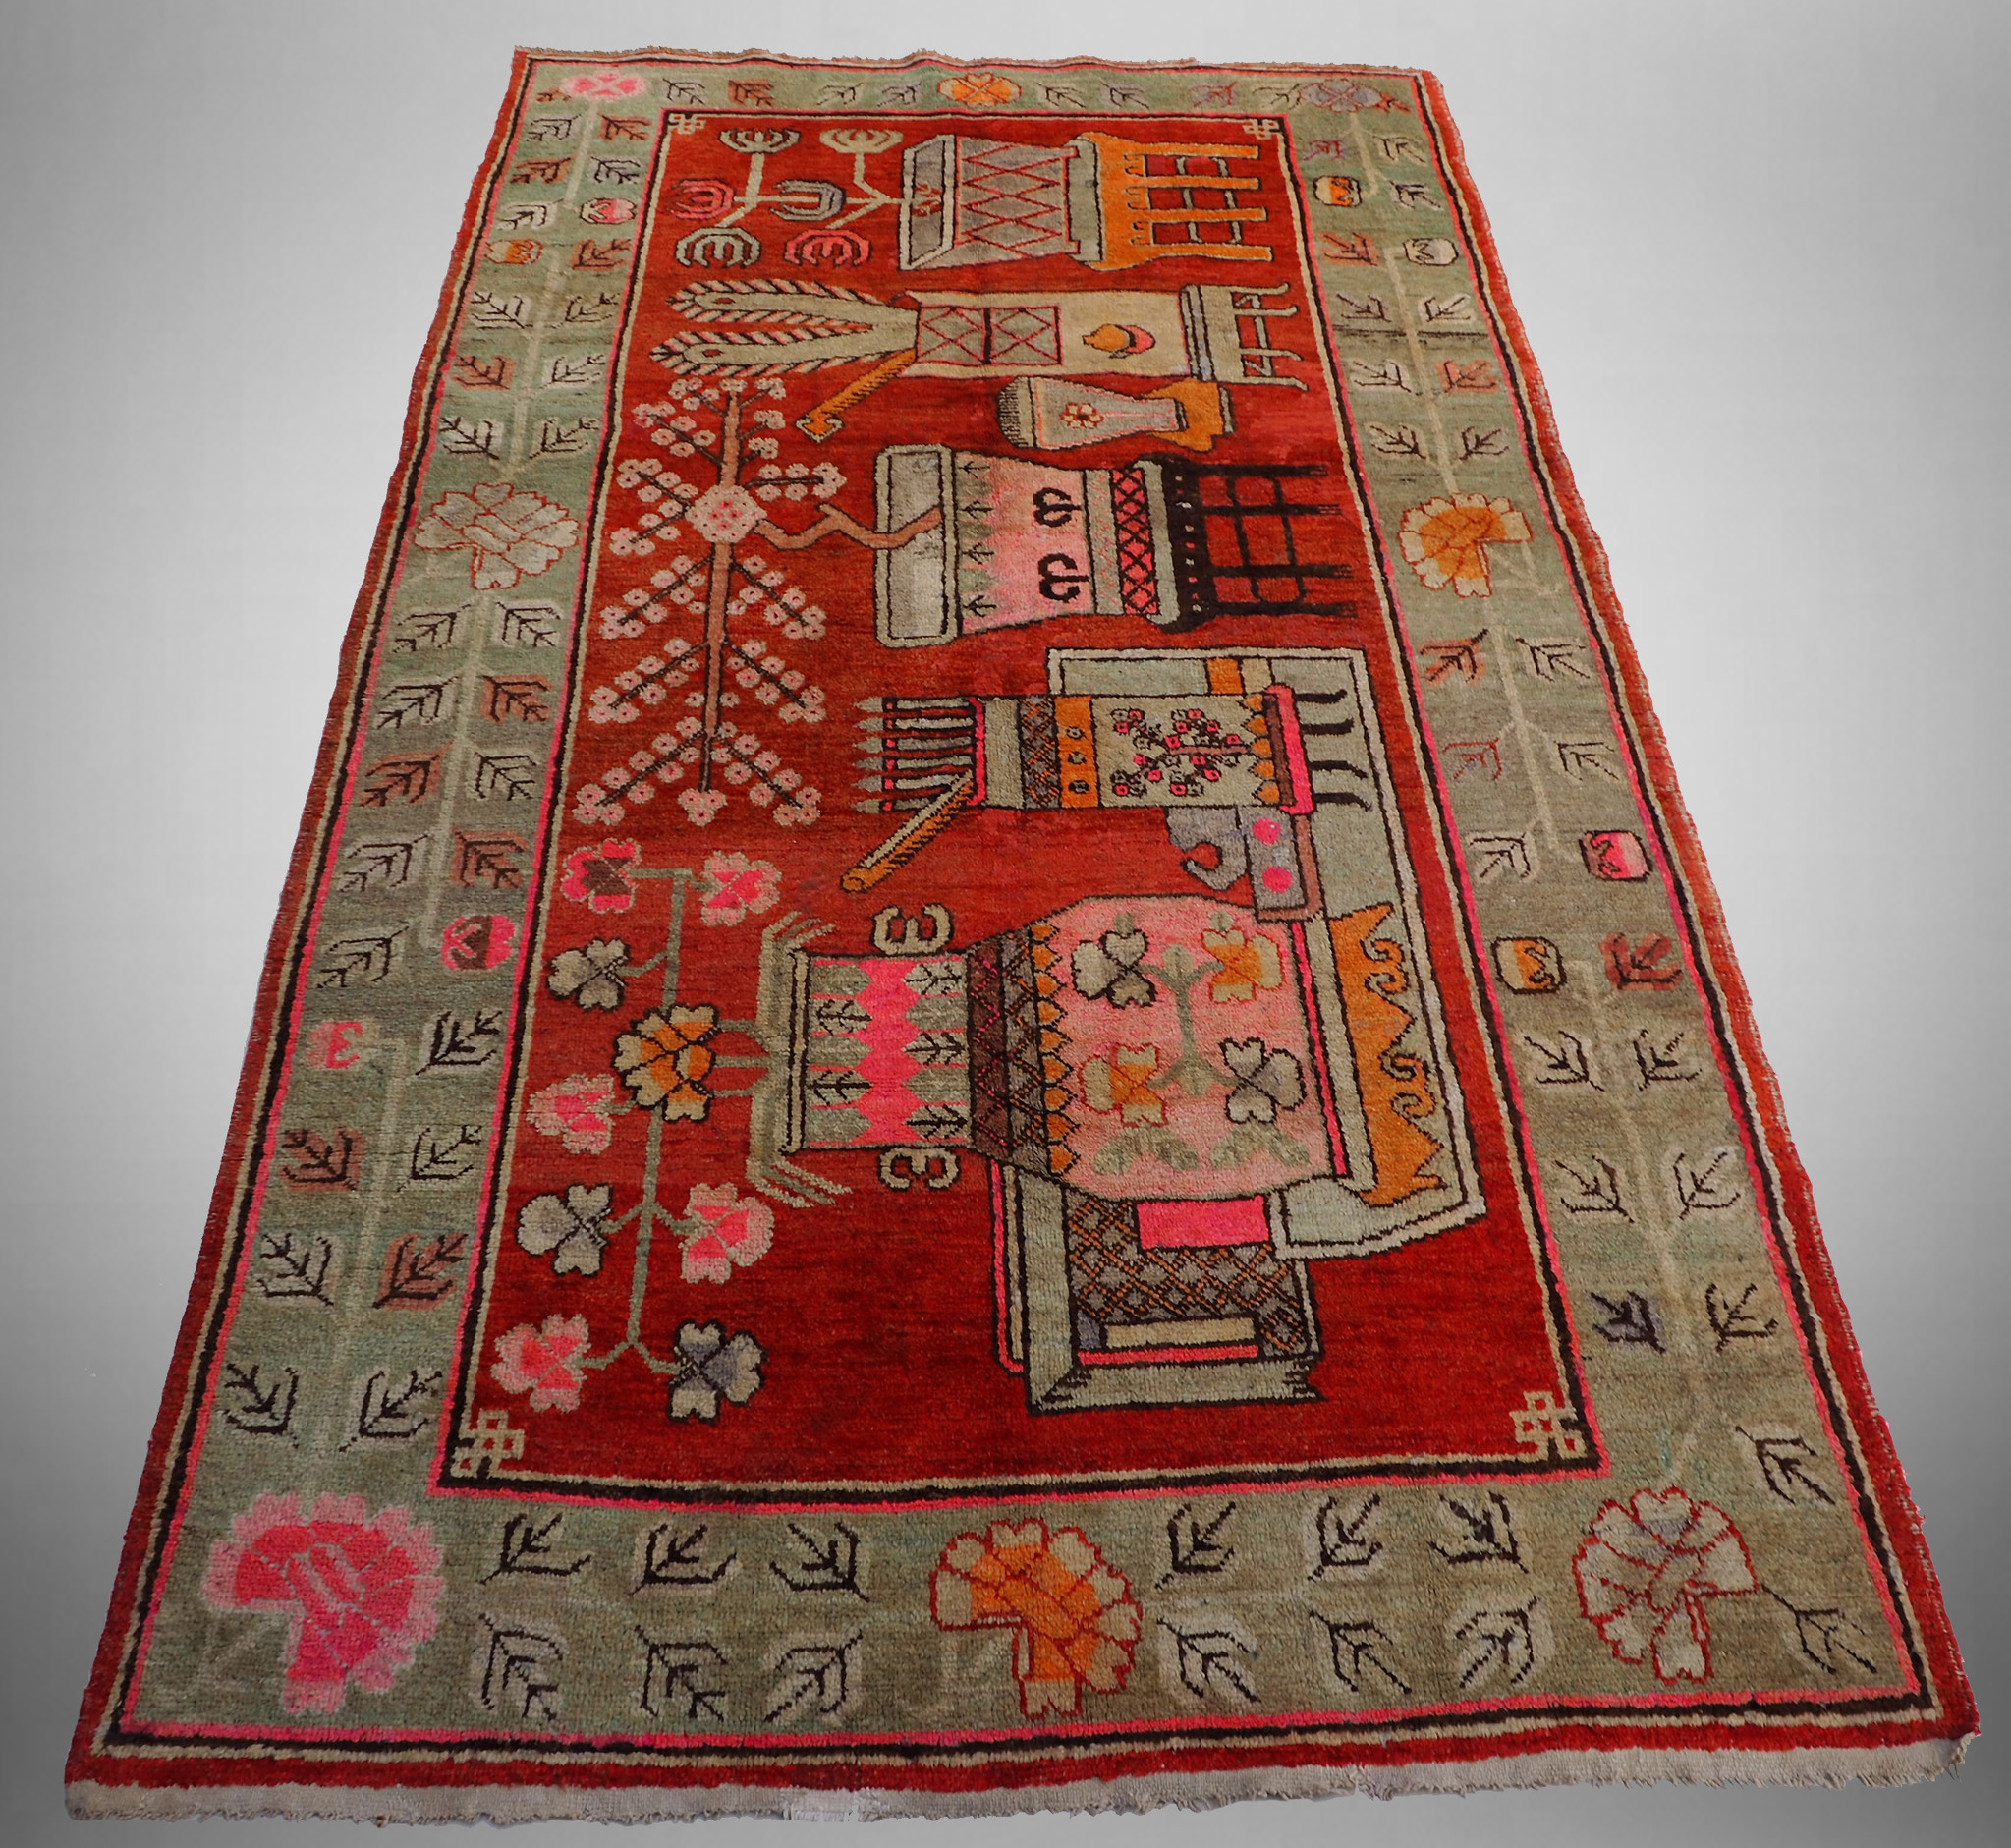 252x146 cm original antique Khotan Samarkand rug Chinese Turkestan hand knotted carpet No:21/41